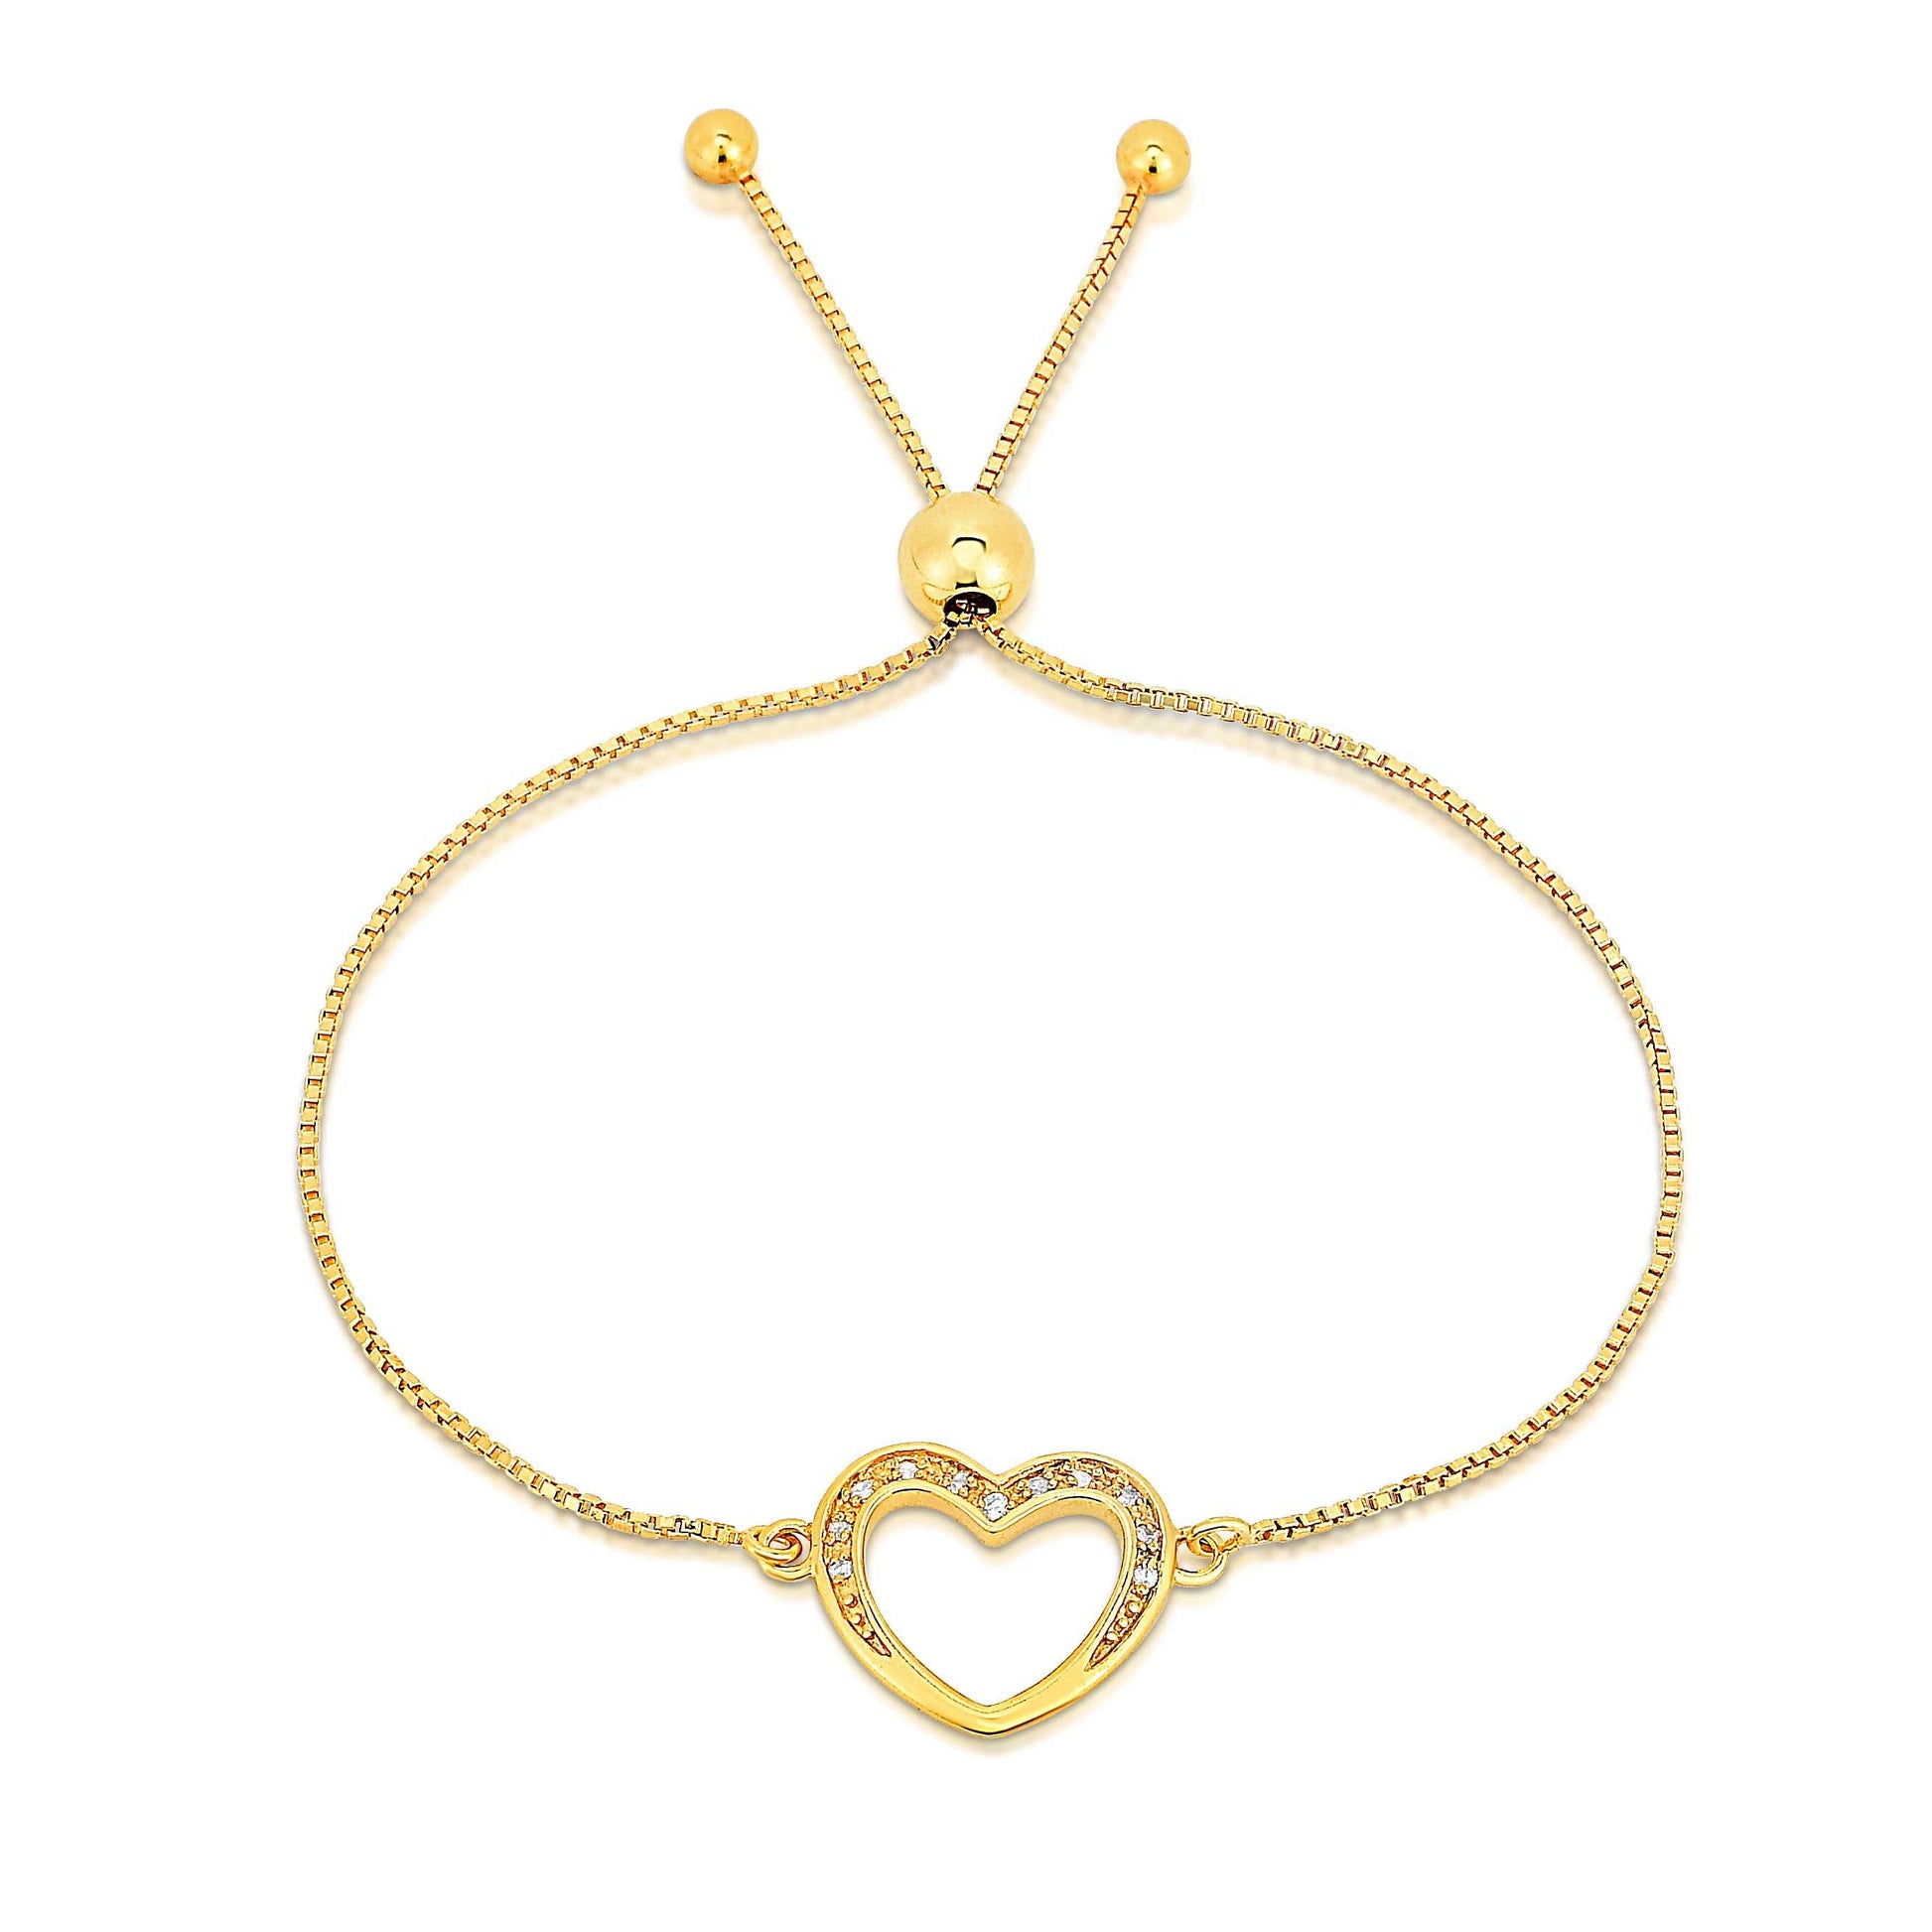 Gold Italian Sterling Silver Adjustable Heart Charm Bracelet